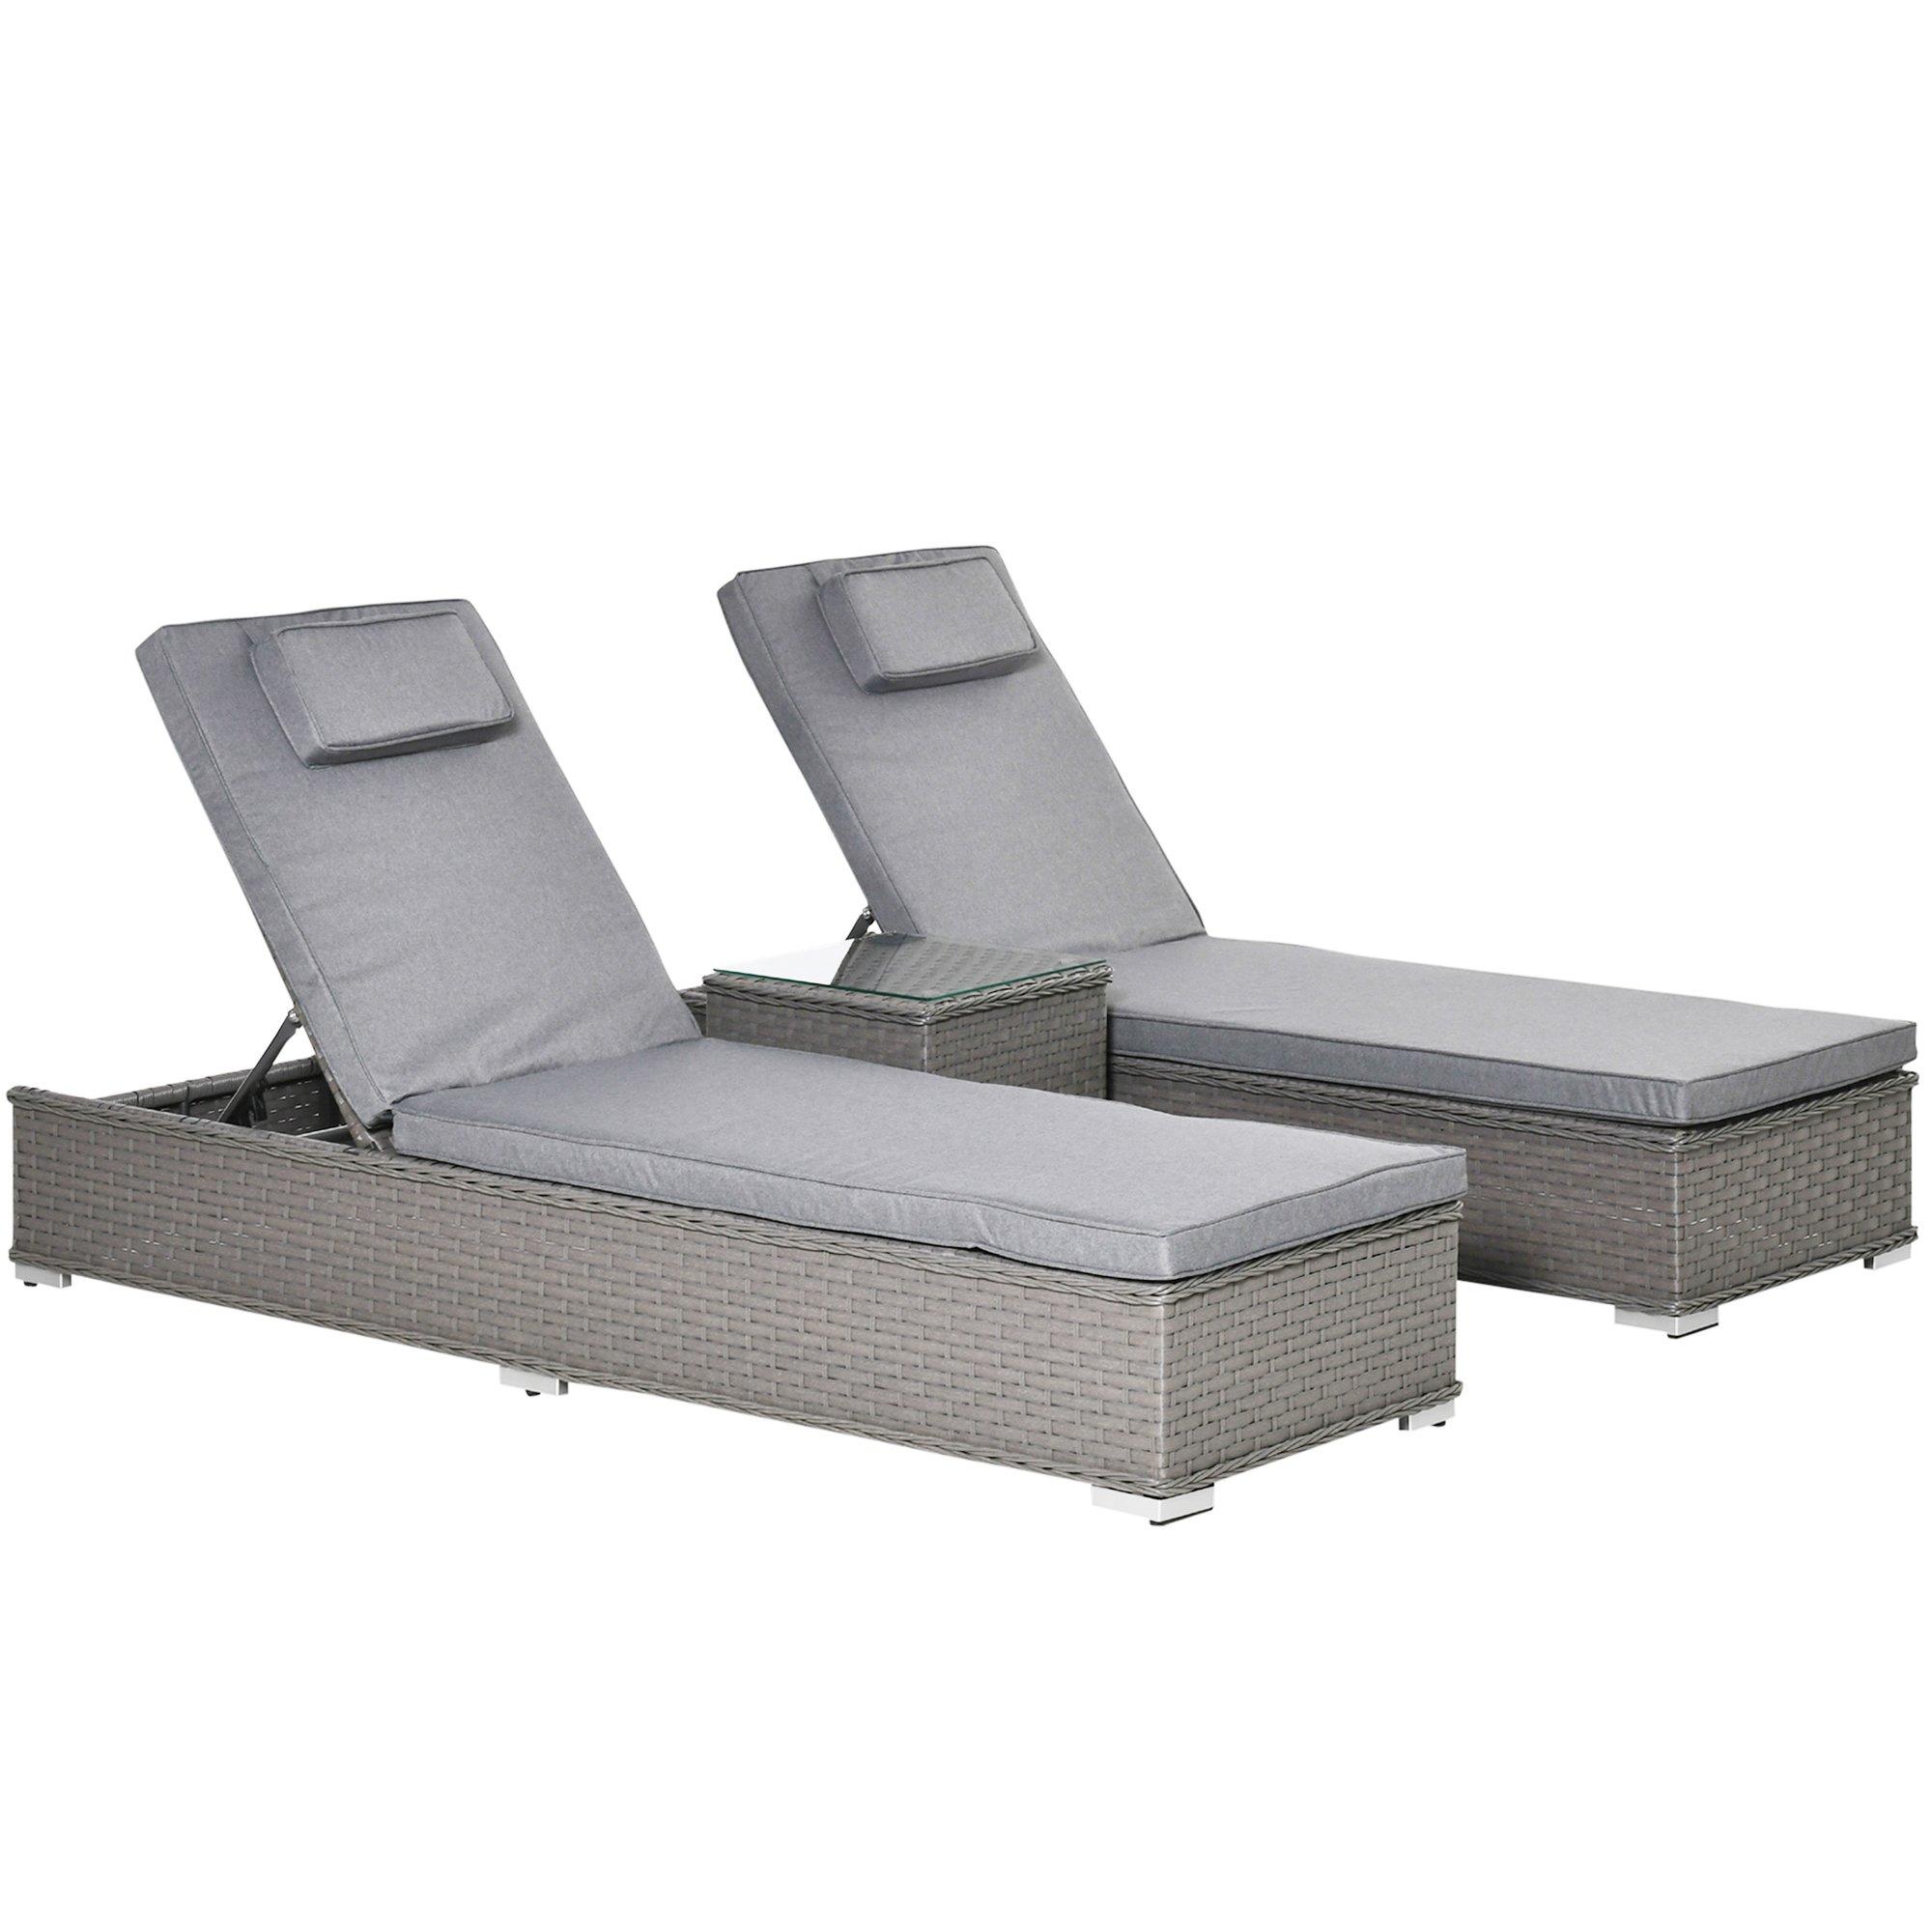 3PC Rattan Sun Lounger Garden Outdoor Wicker Recliner Bed Side Table - Grey